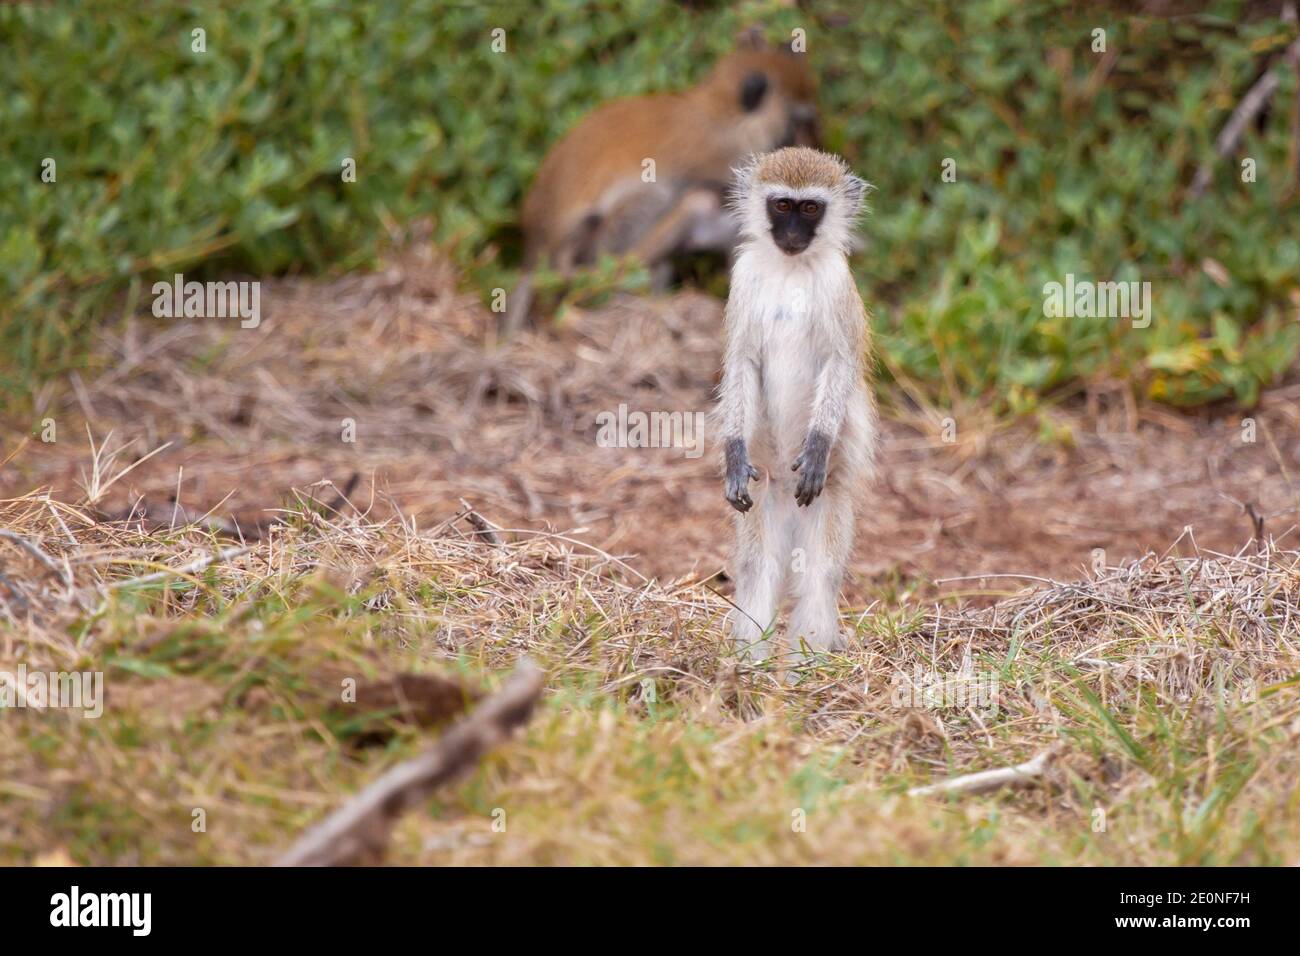 Monkey watching, on safari in Kenya. Stock Photo